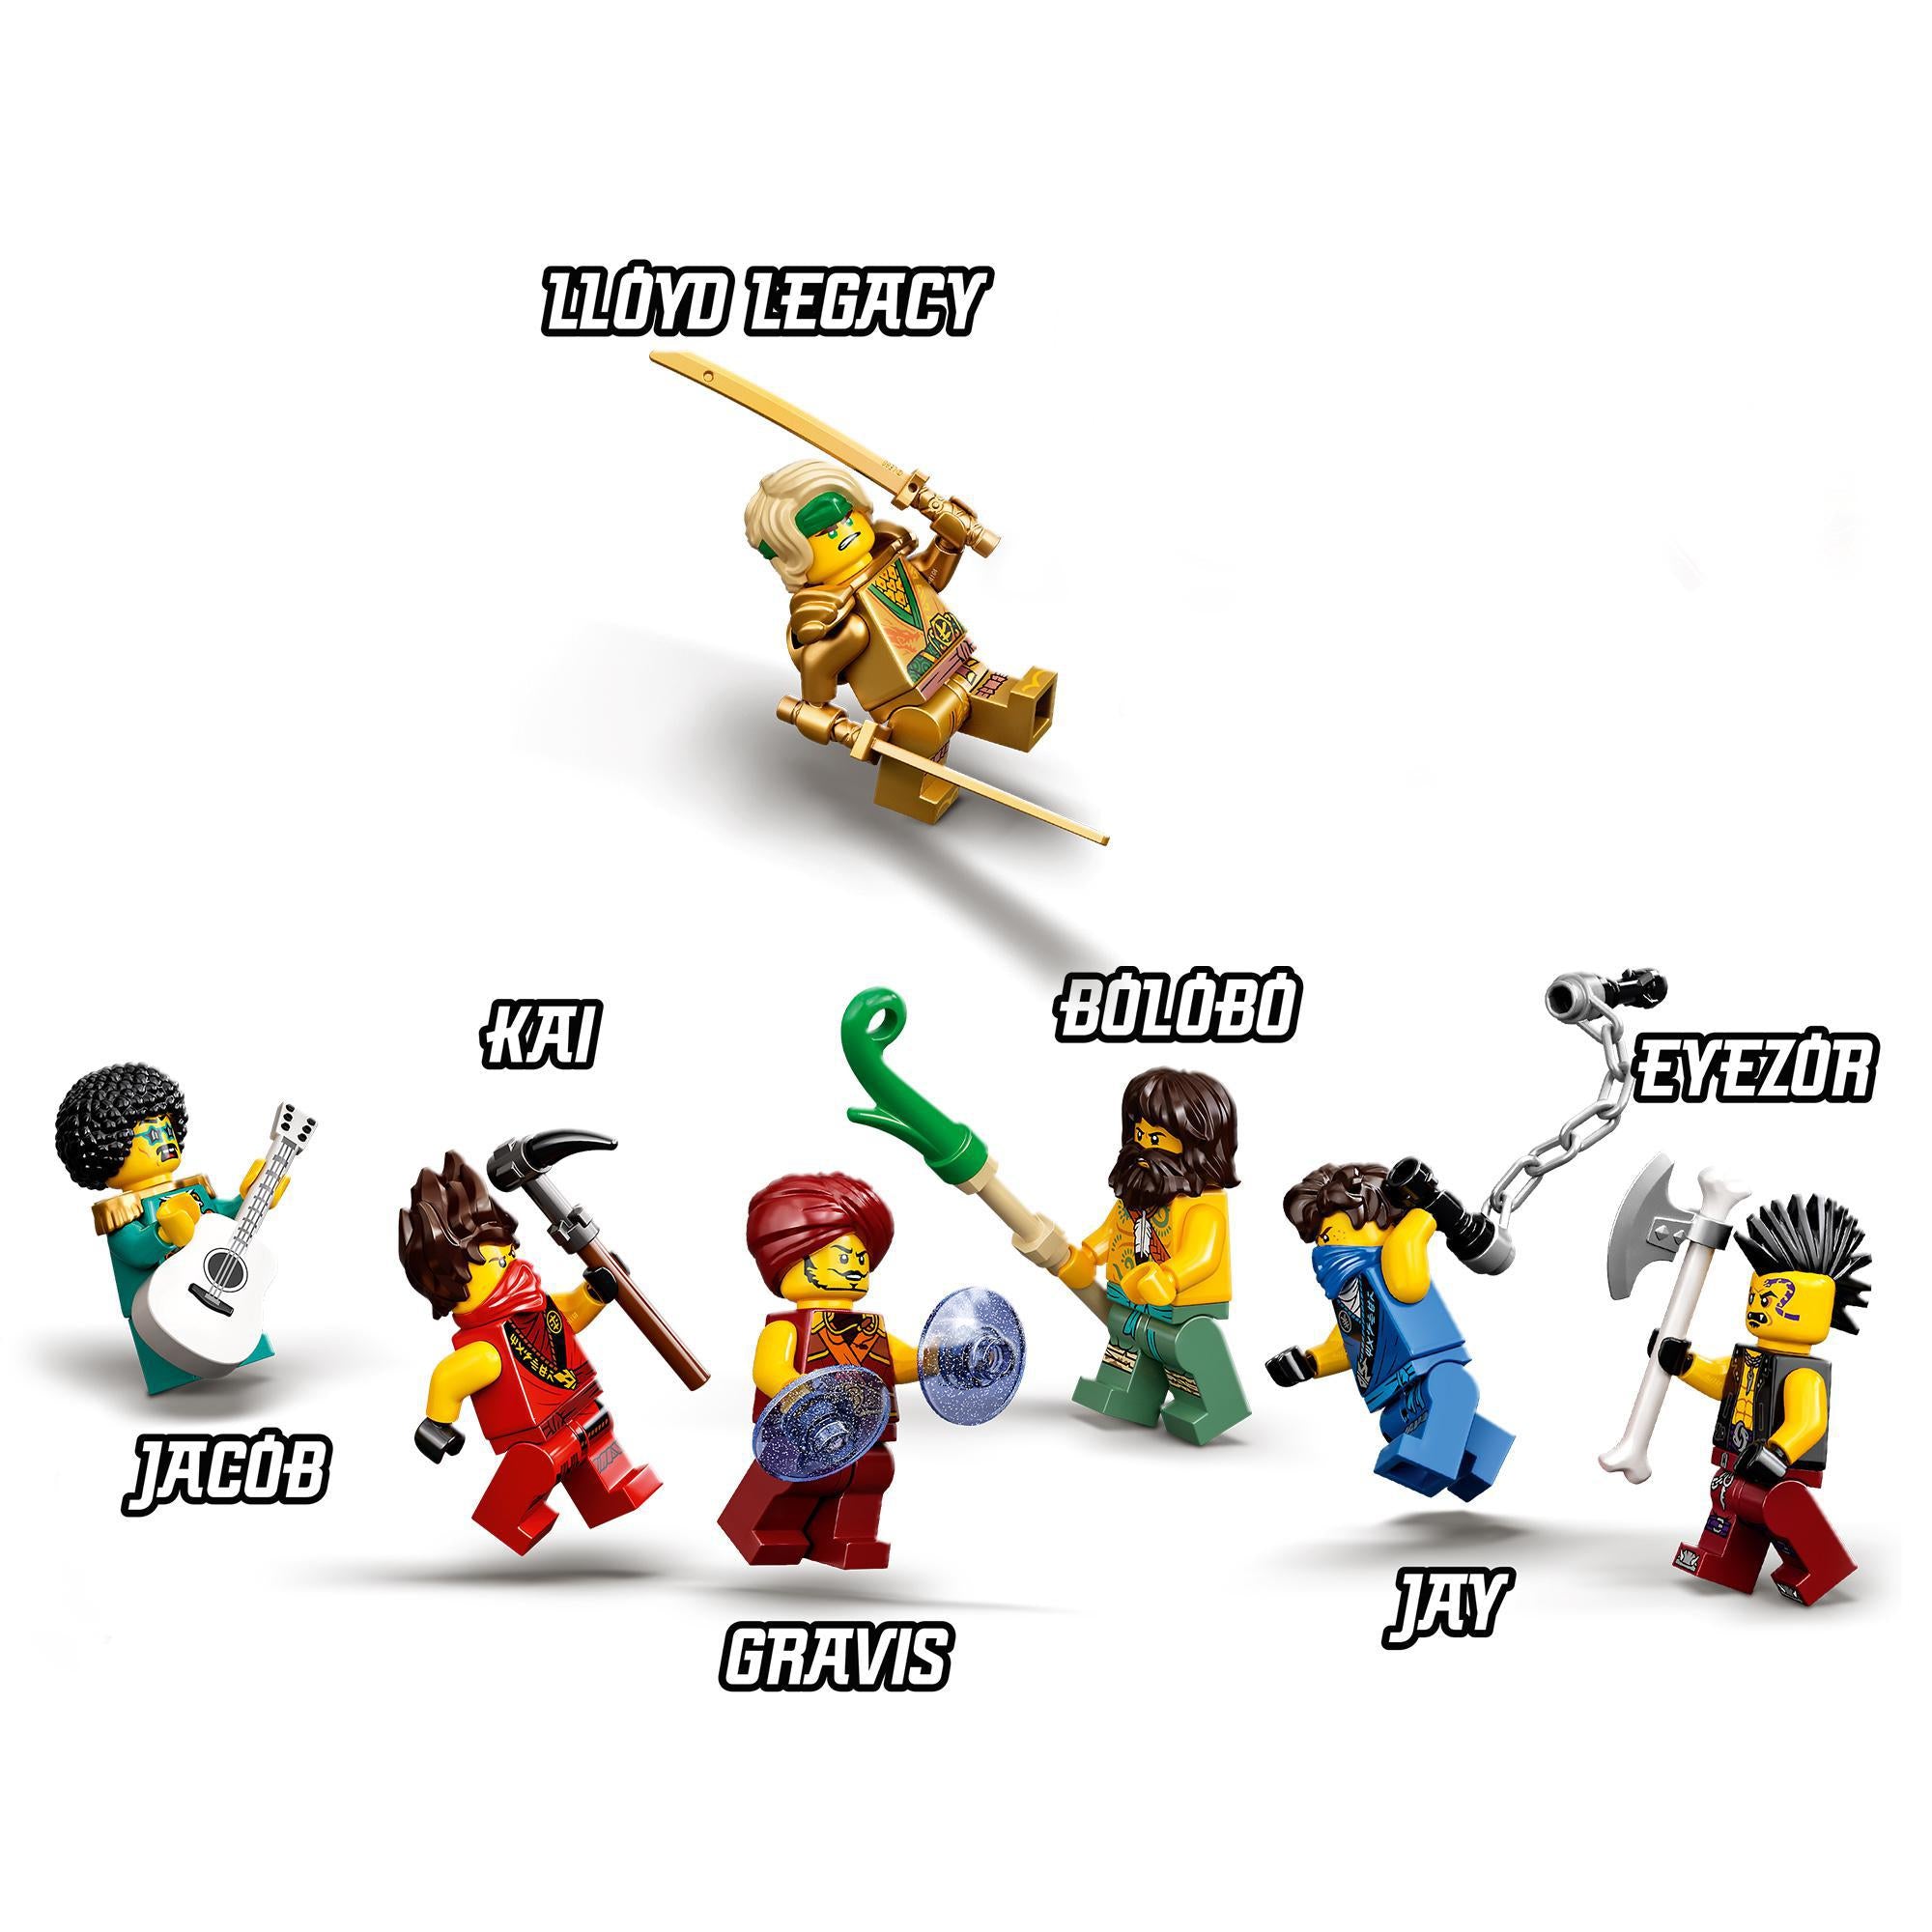 LEGO® NINJAGO Legacy Tournament of Elements Set 71735 Default Title